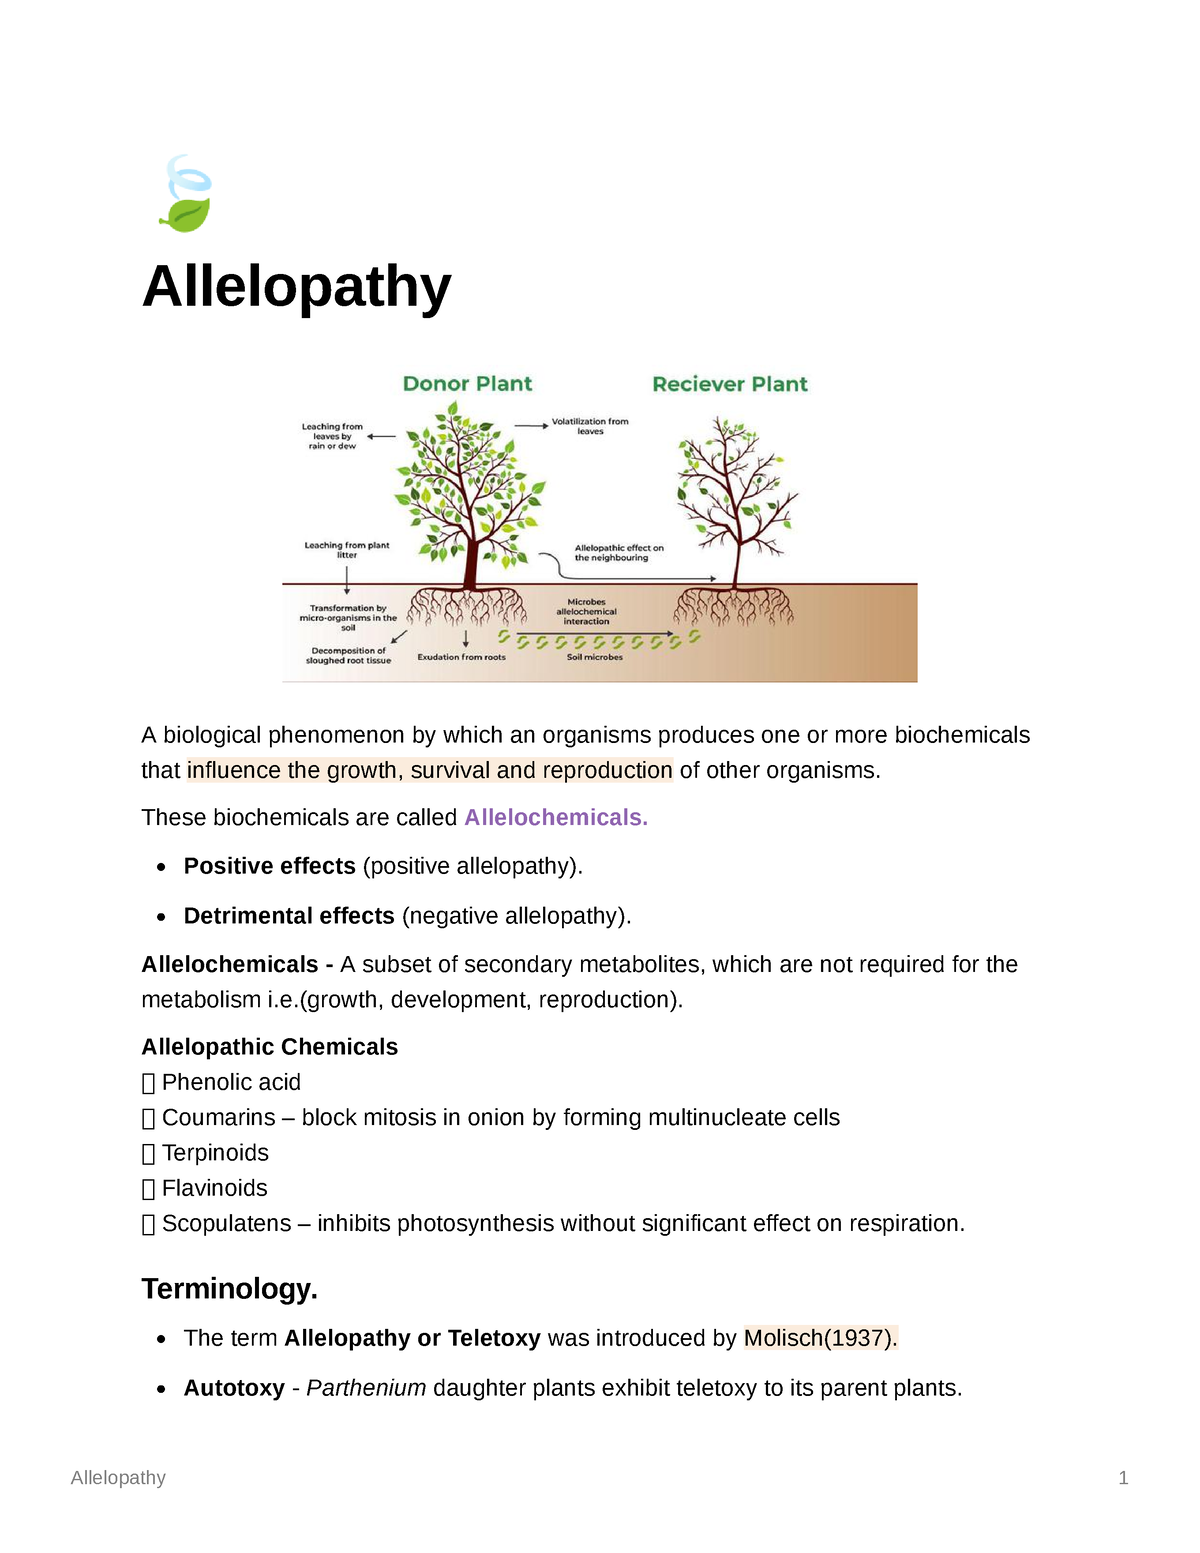 Allelopathy Yuvaraj 8 Allelopathy A Biological Phenomenon By Which An Organisms Produces One